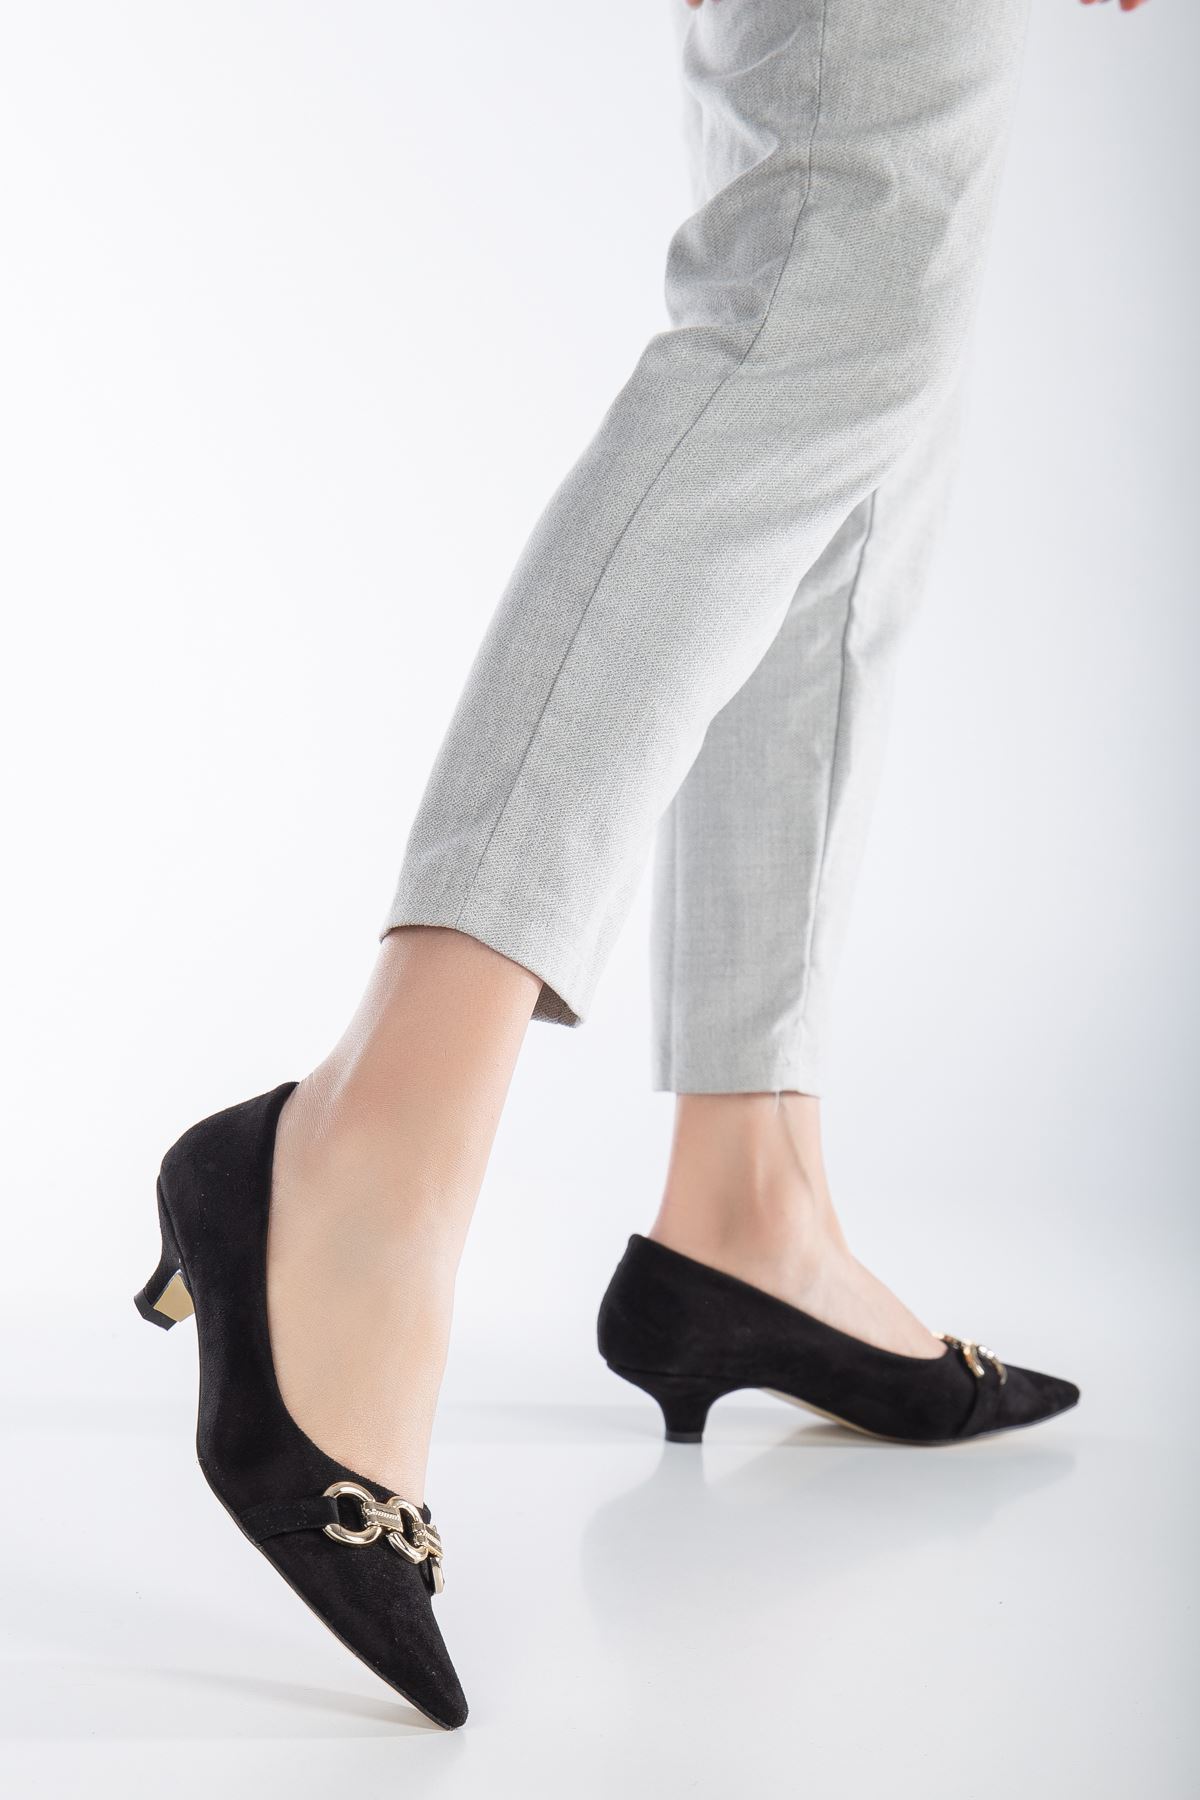 Odella Gold Toka Detaylı Topuklu Ayakkabı Siyah Süet